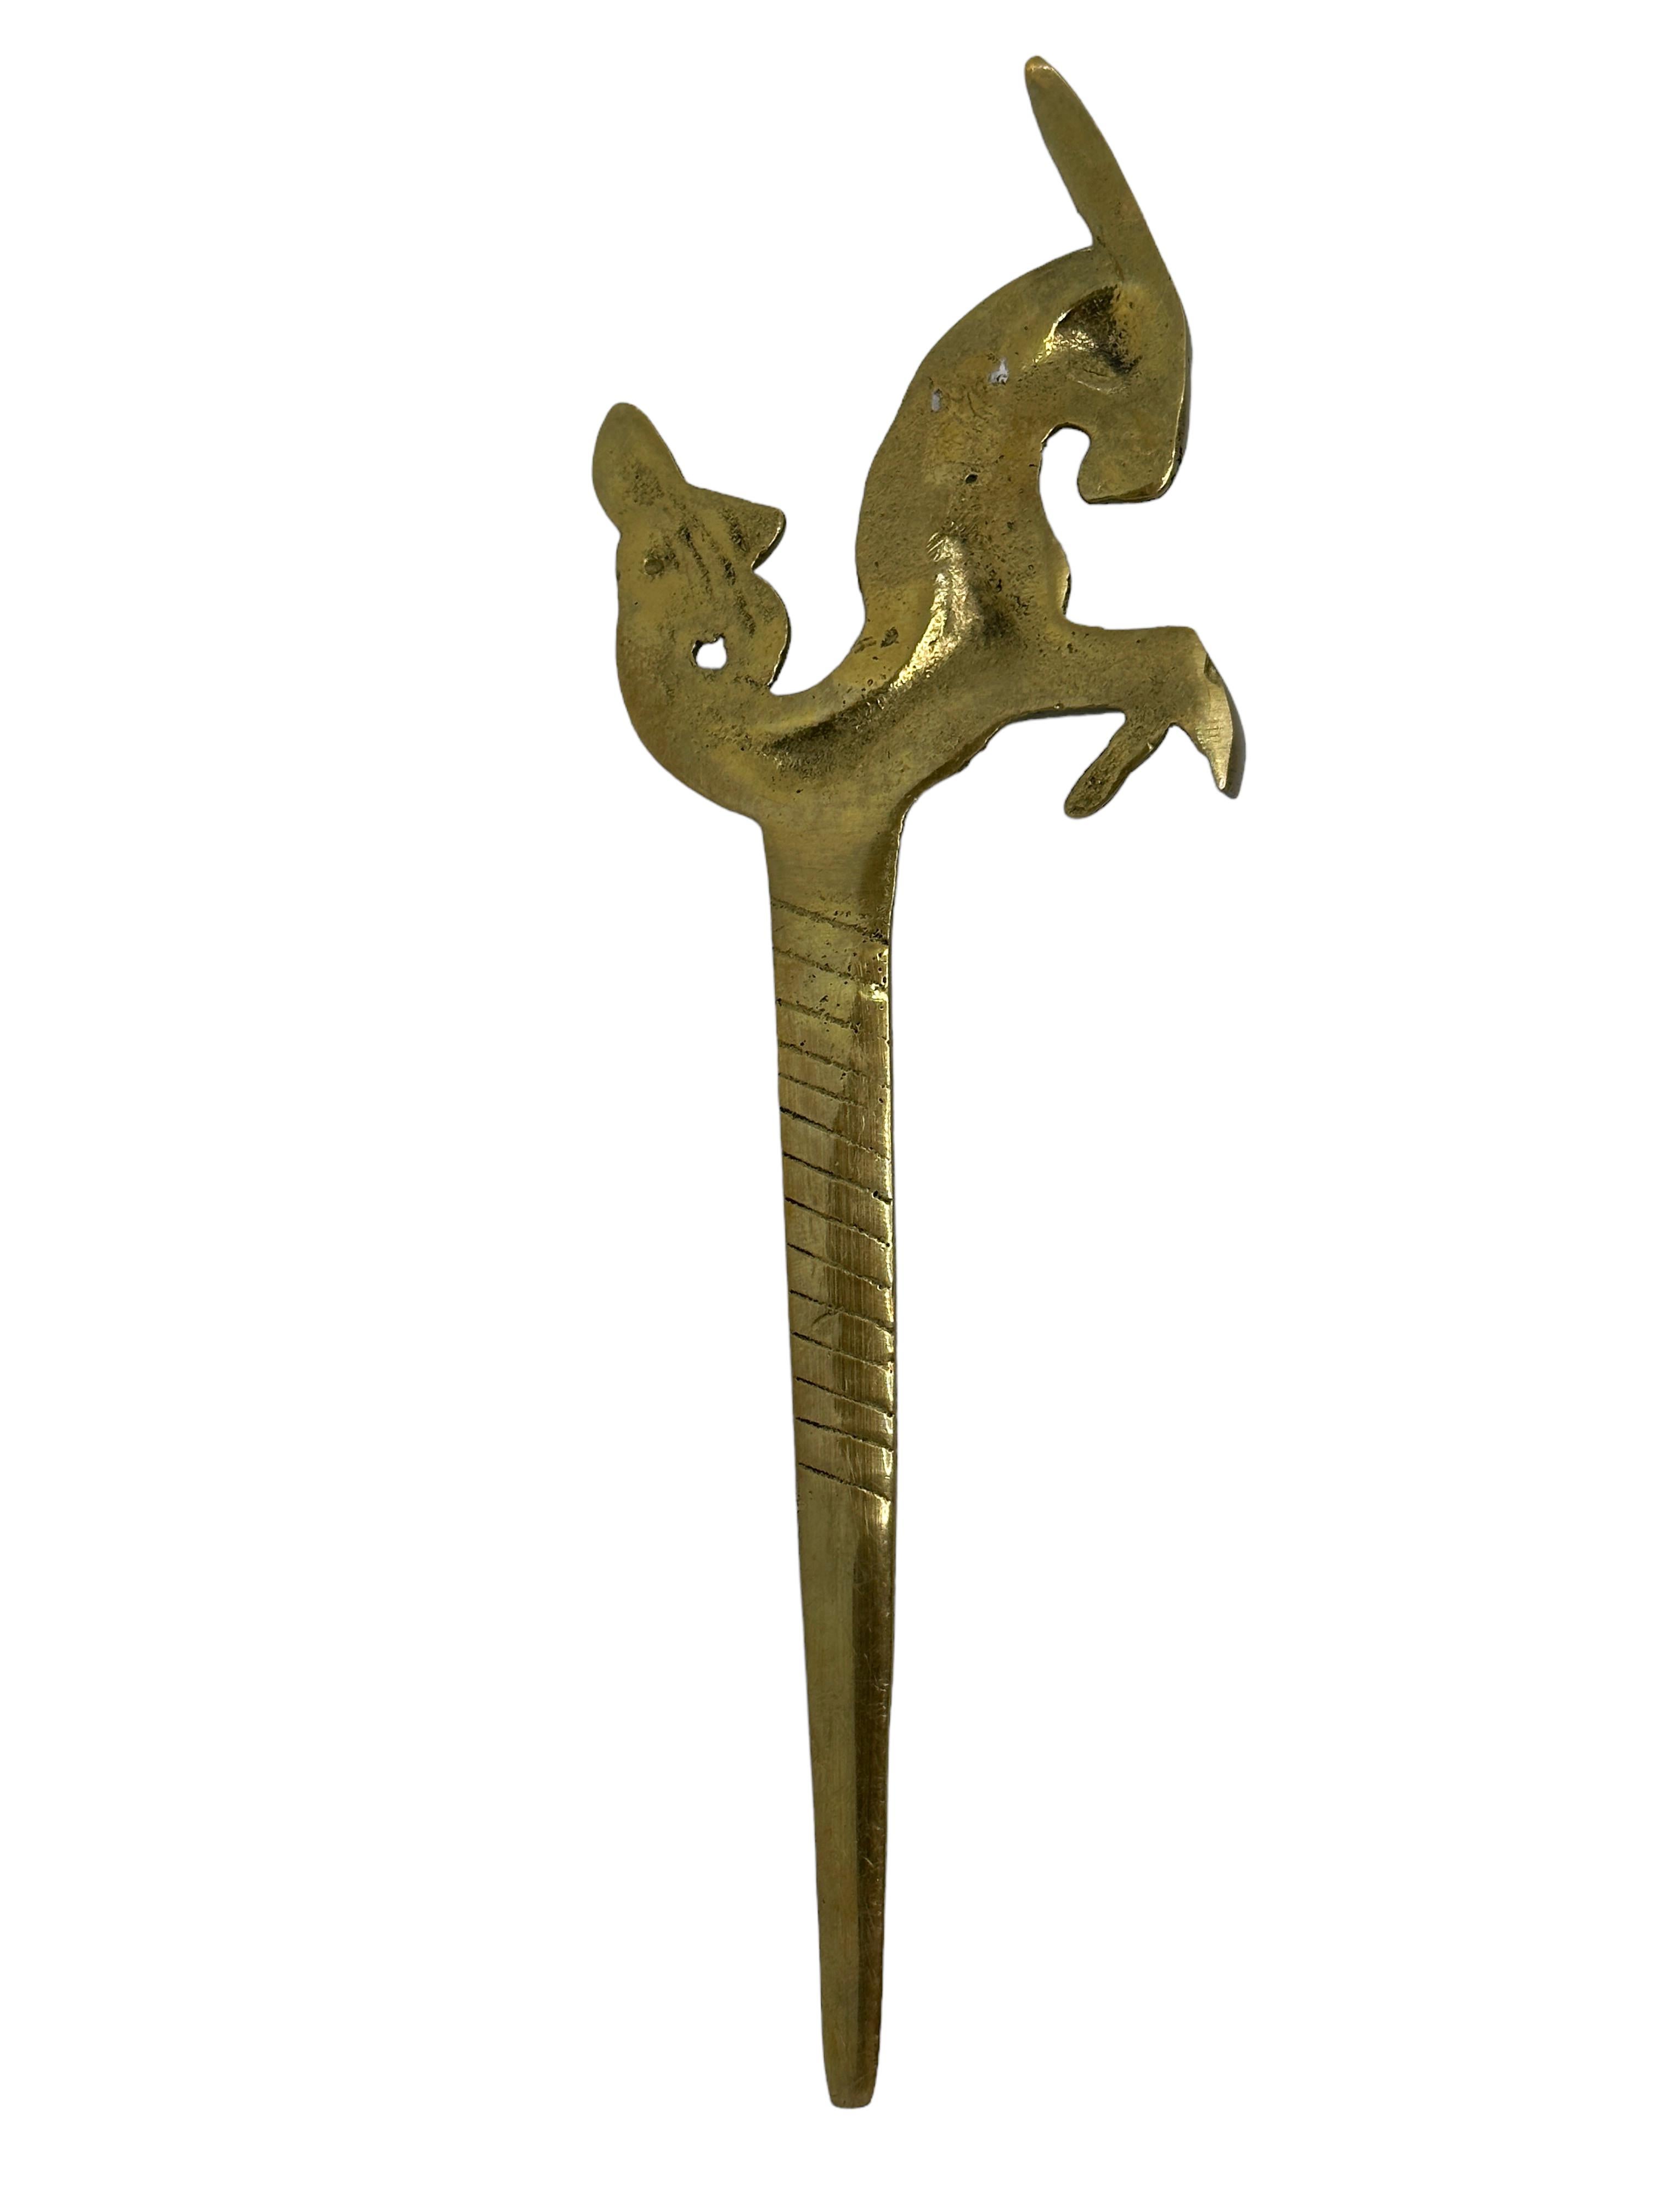 Unicorn Mythical Creature Vienna Bronze Letter Opener, Antique Austria 1960s For Sale 1